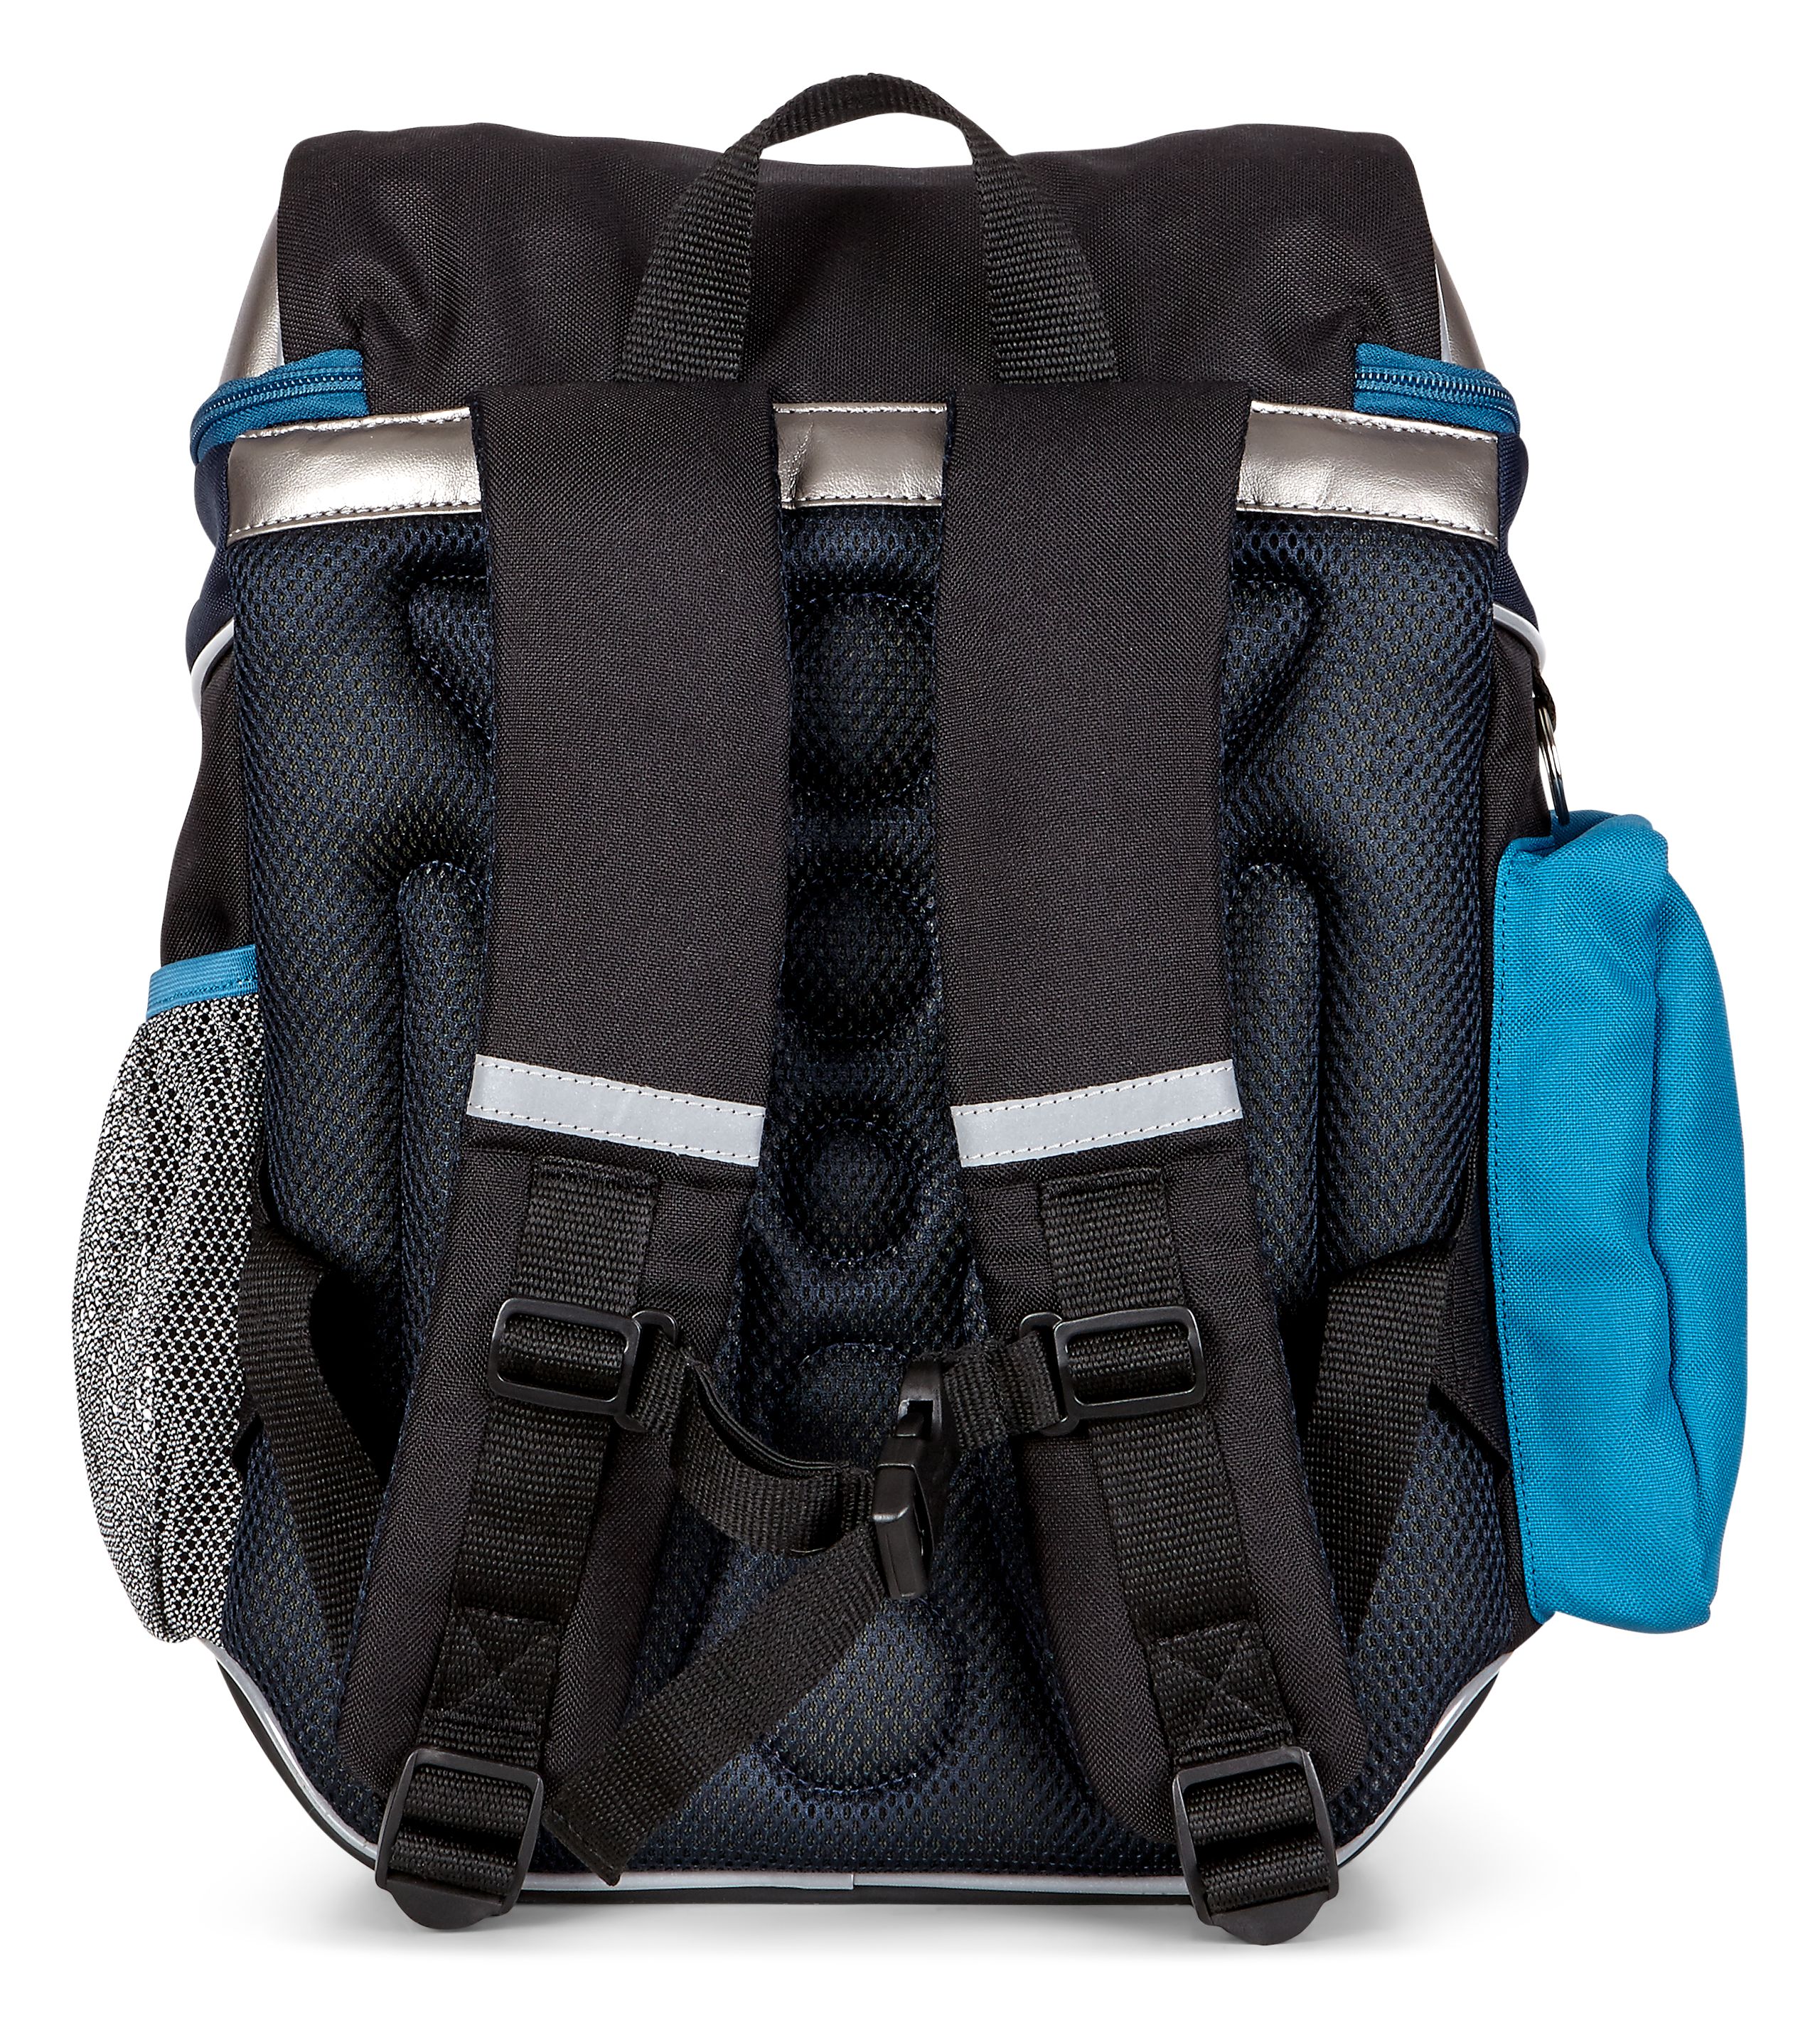 B2S Backpack 4-6yrs - ECCO.com